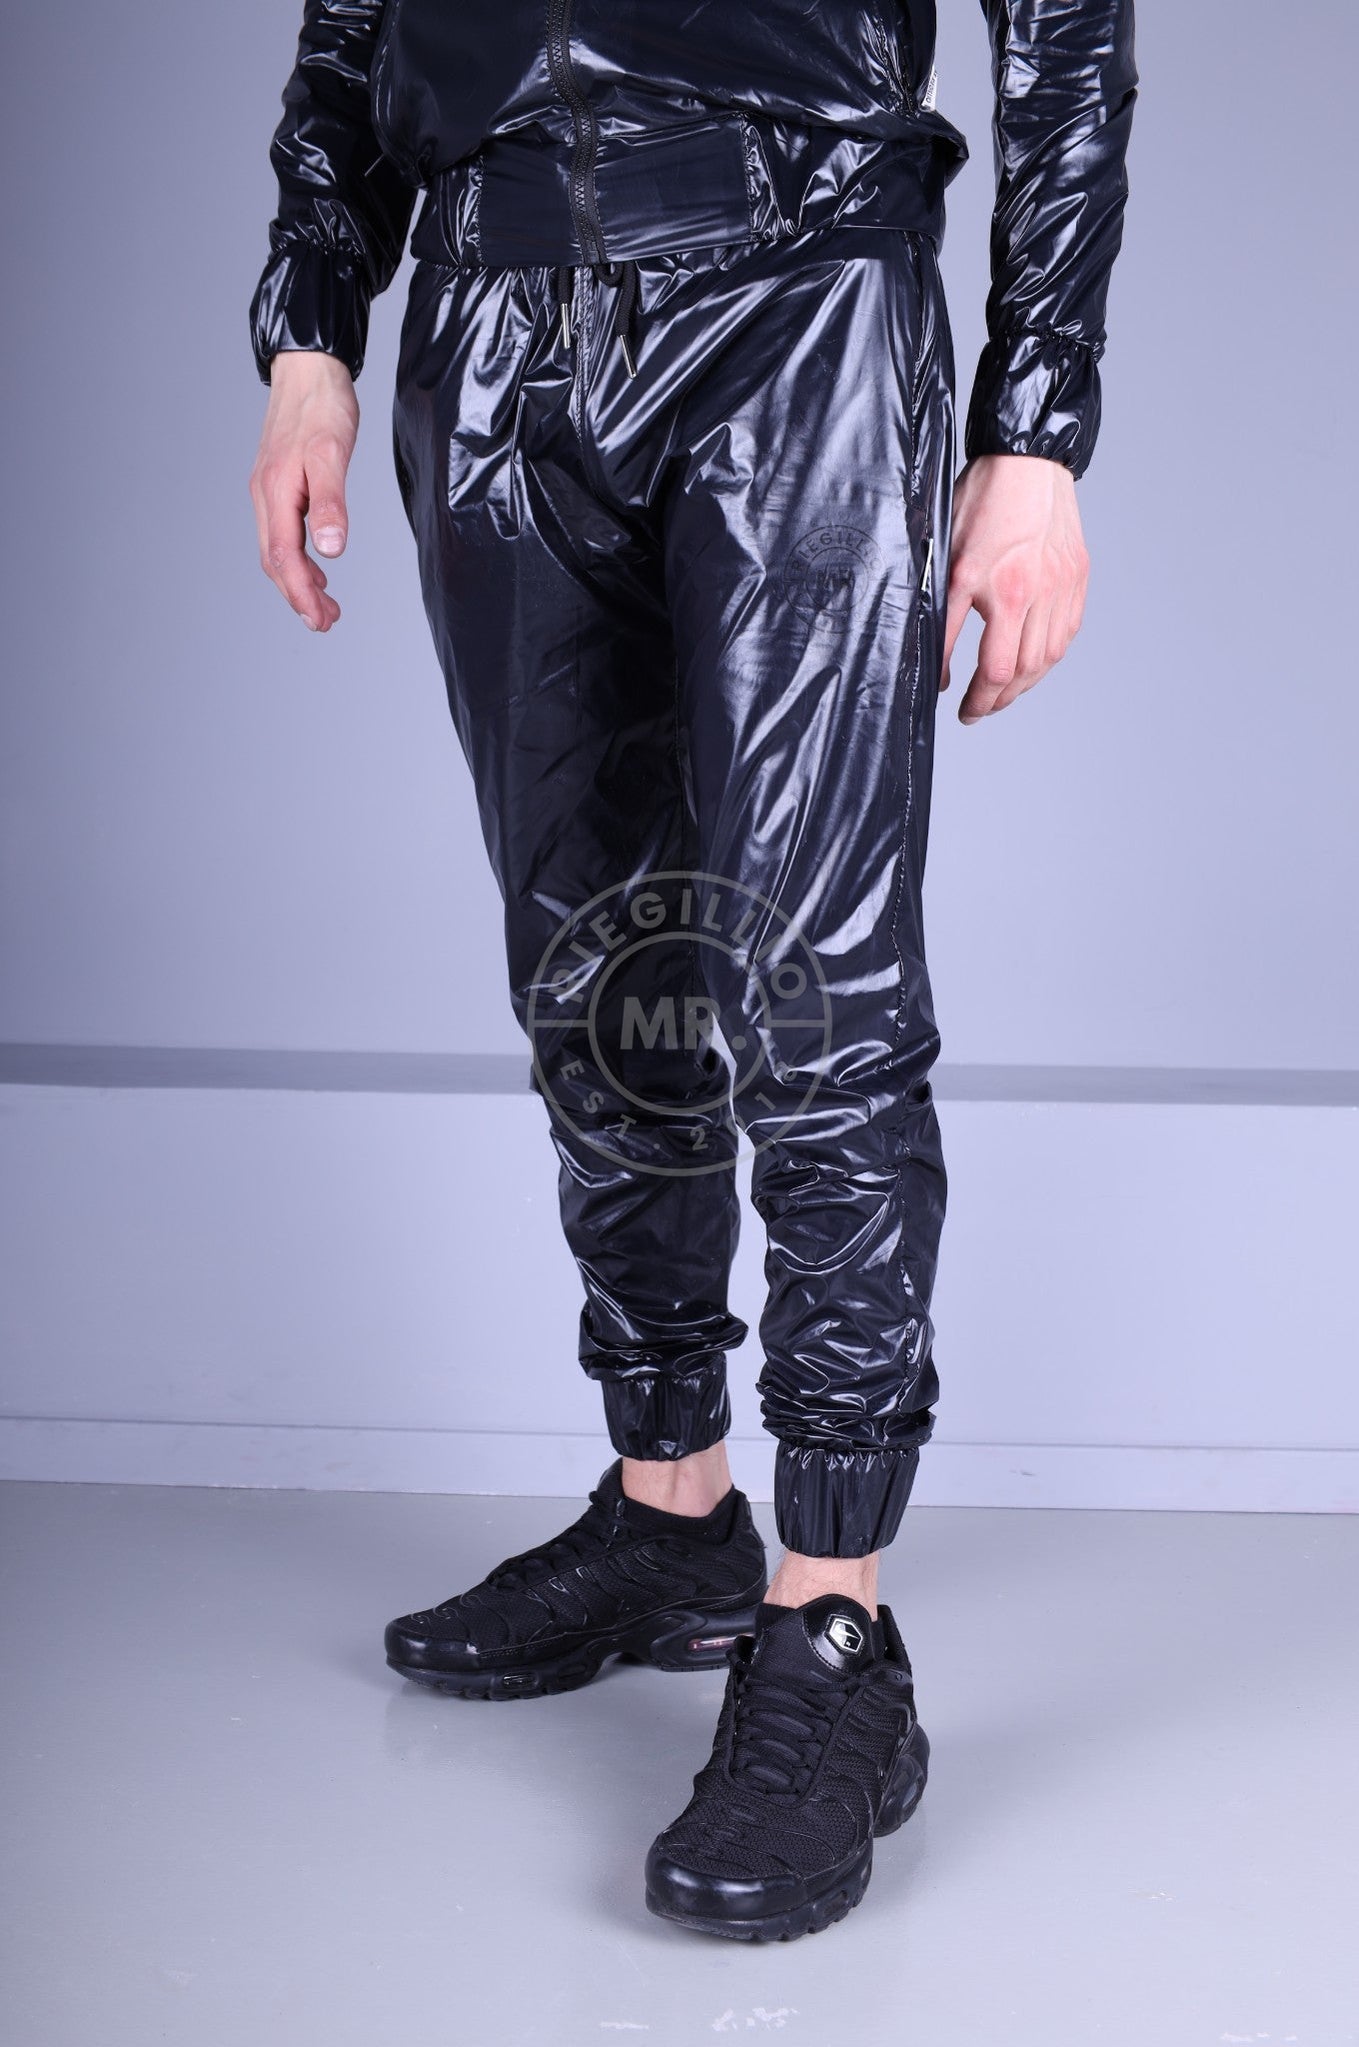 Full Black Shiny Nylon Tracksuit Pants at MR. Riegillio